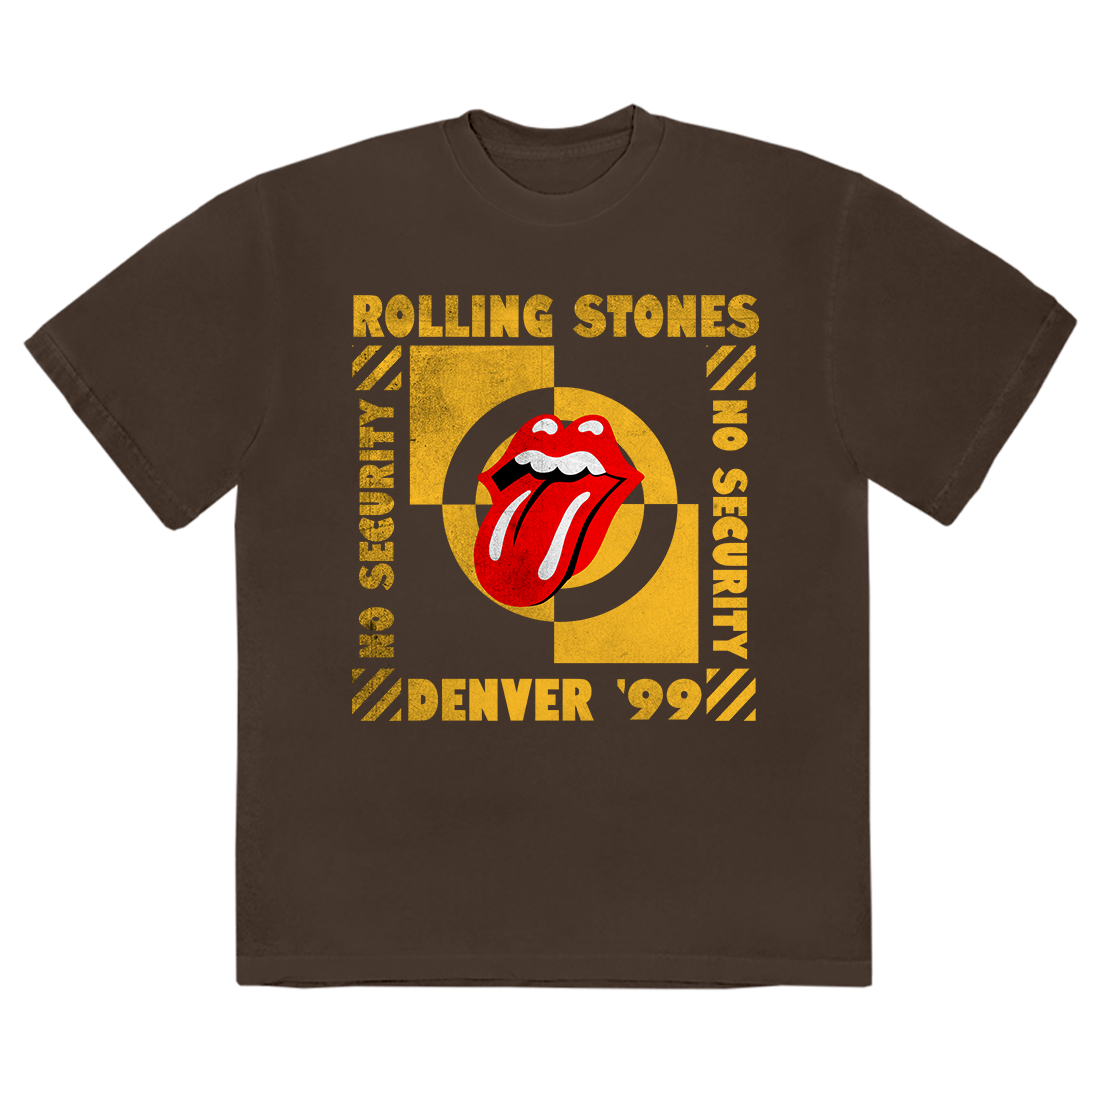 The Rolling Stones - Denver '99 Parking Lot T-Shirt